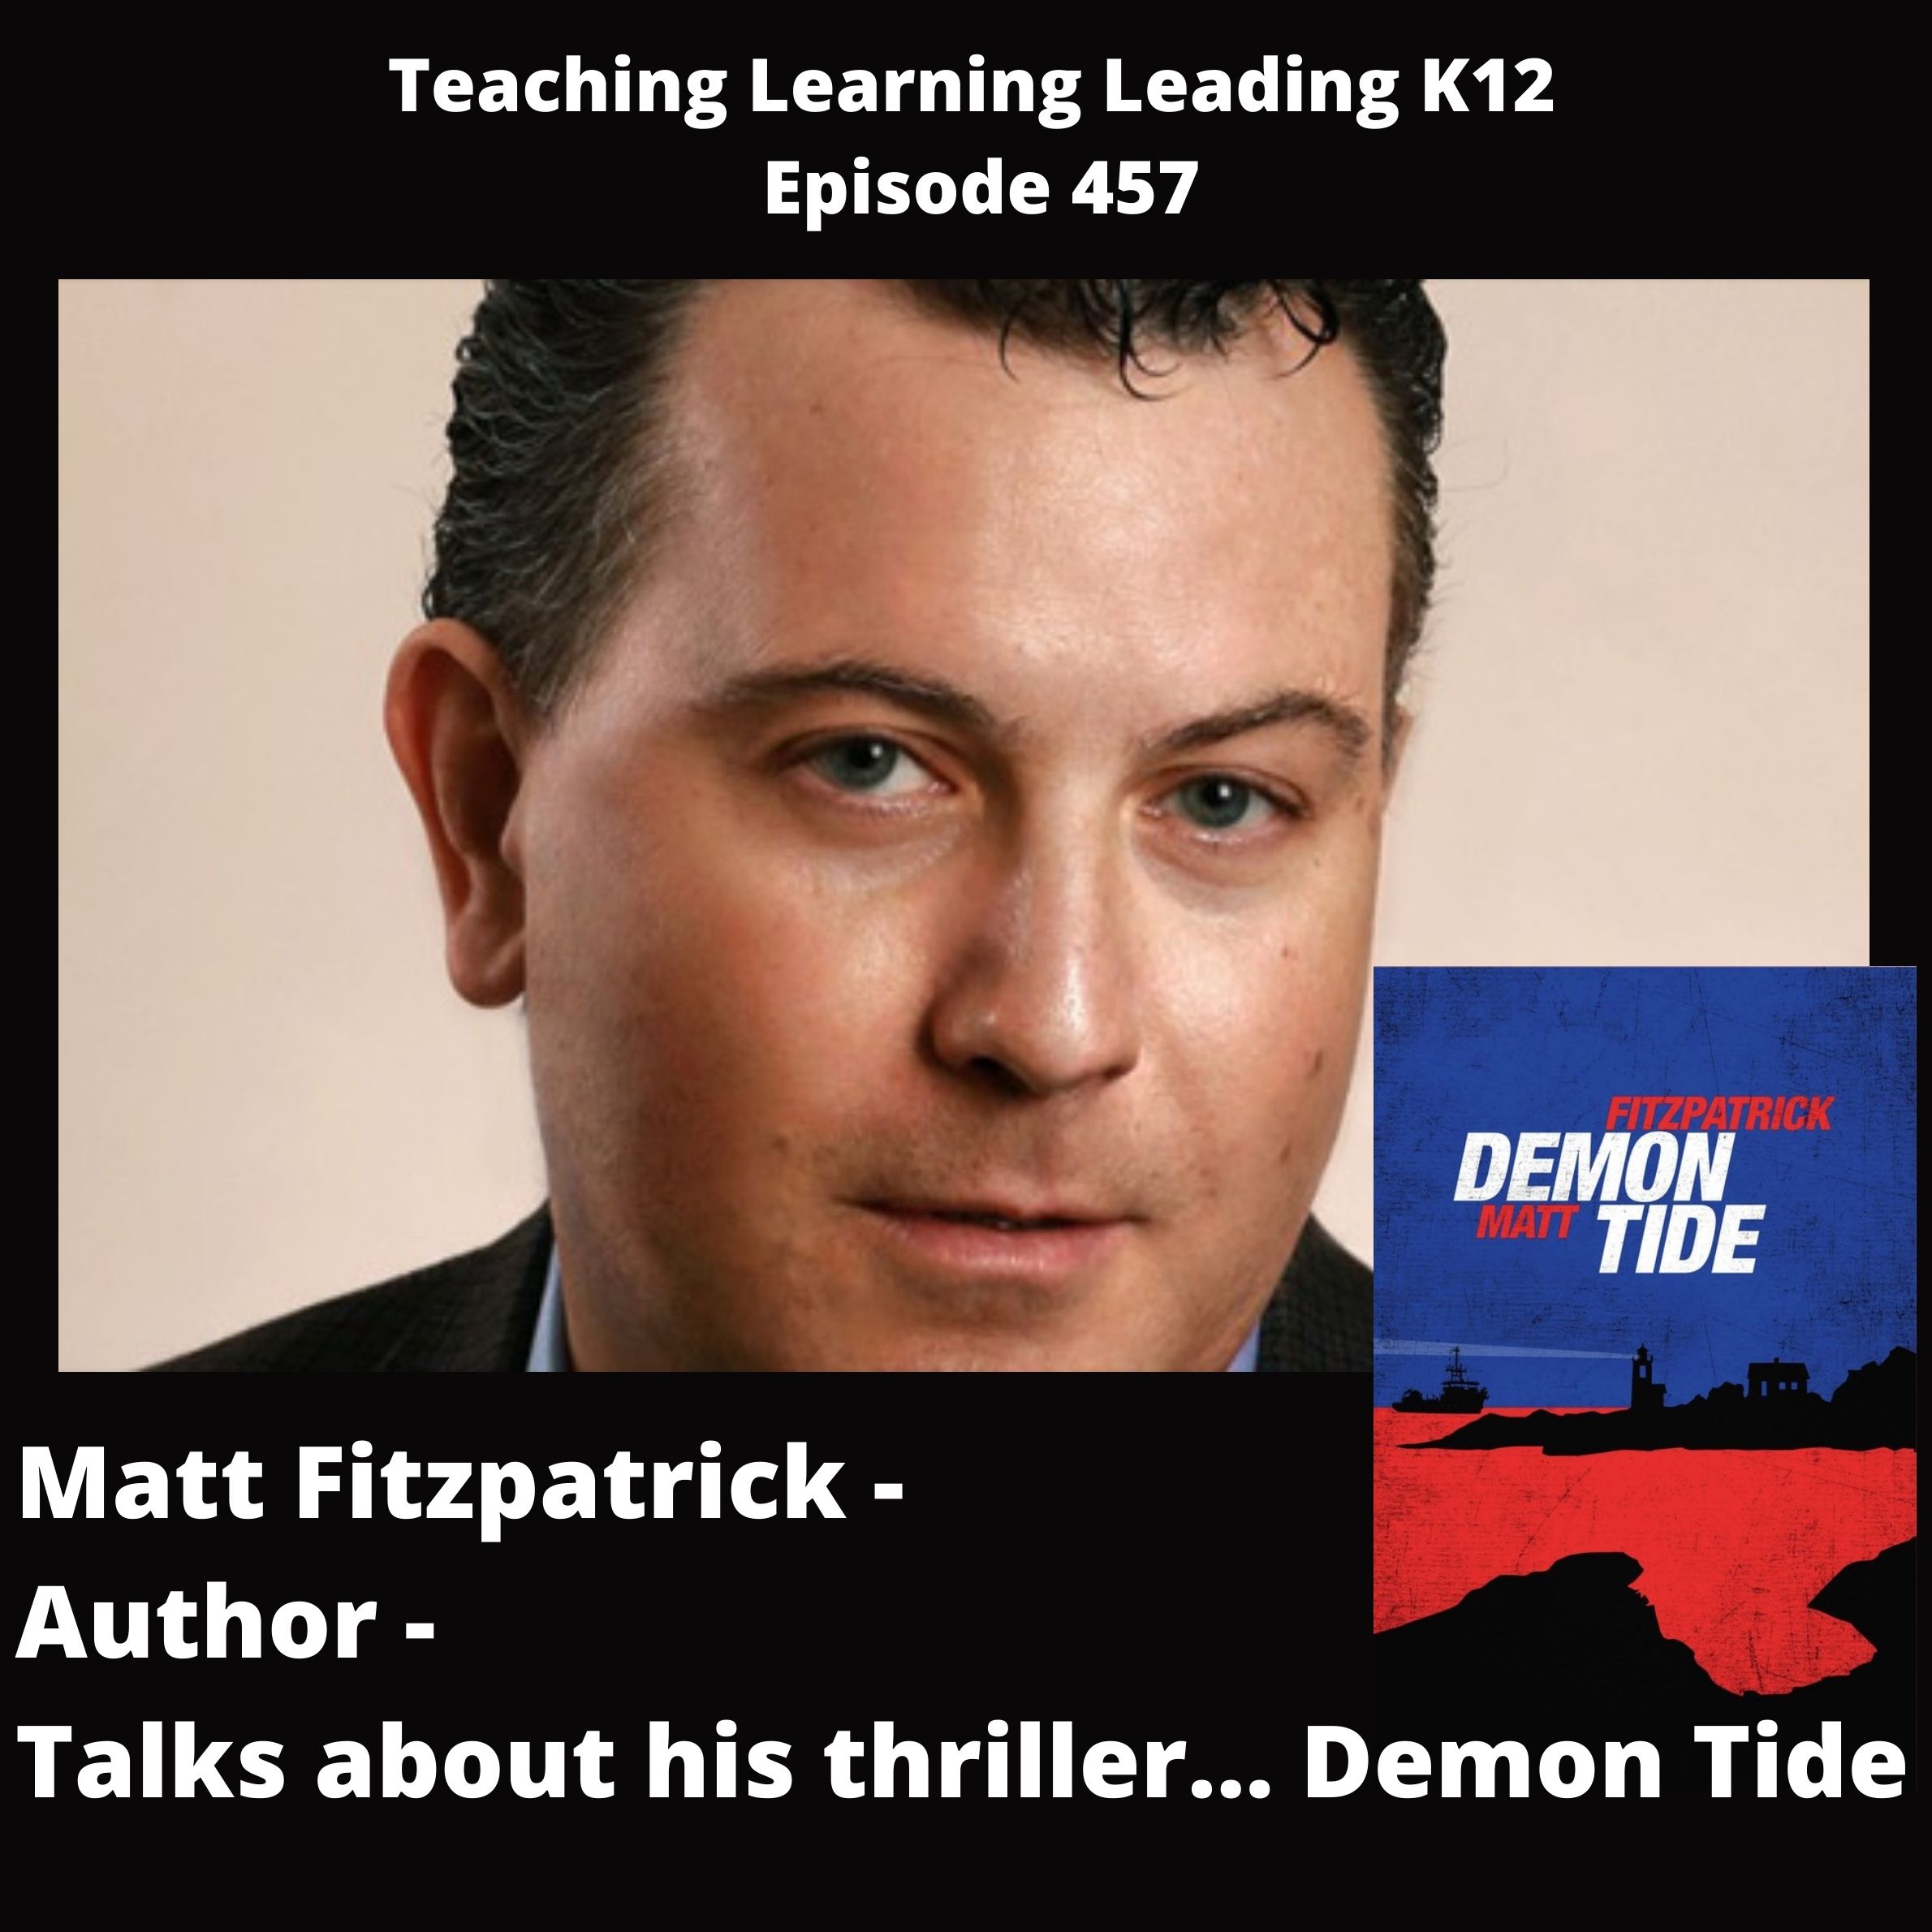 Matt Fitzpatrick, Author, Talks About His Thriller: Demon Tide - 457